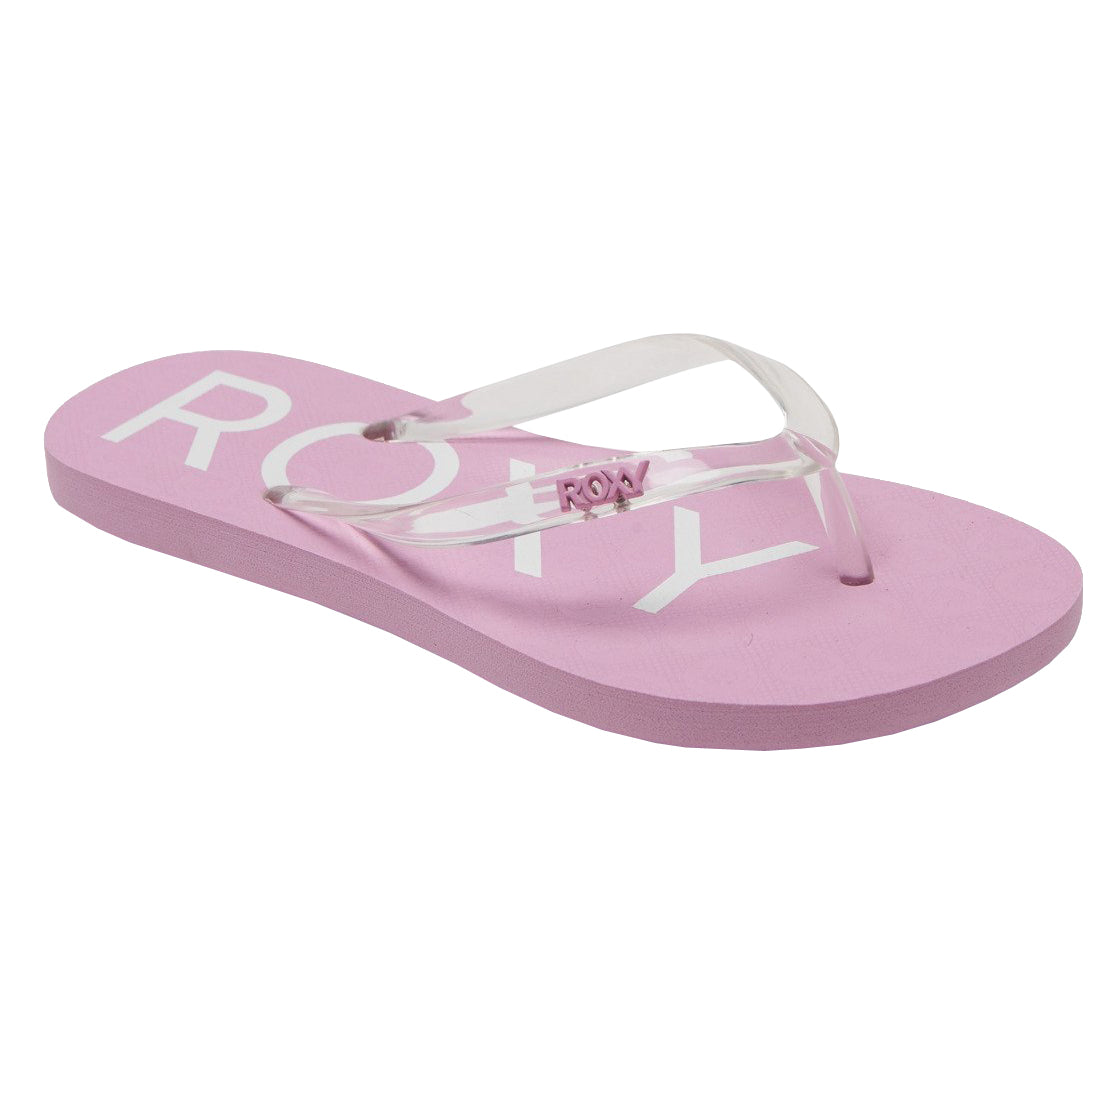 Roxy Viva Jelly Girls Sandal LRS-Lilac Rose 11 C